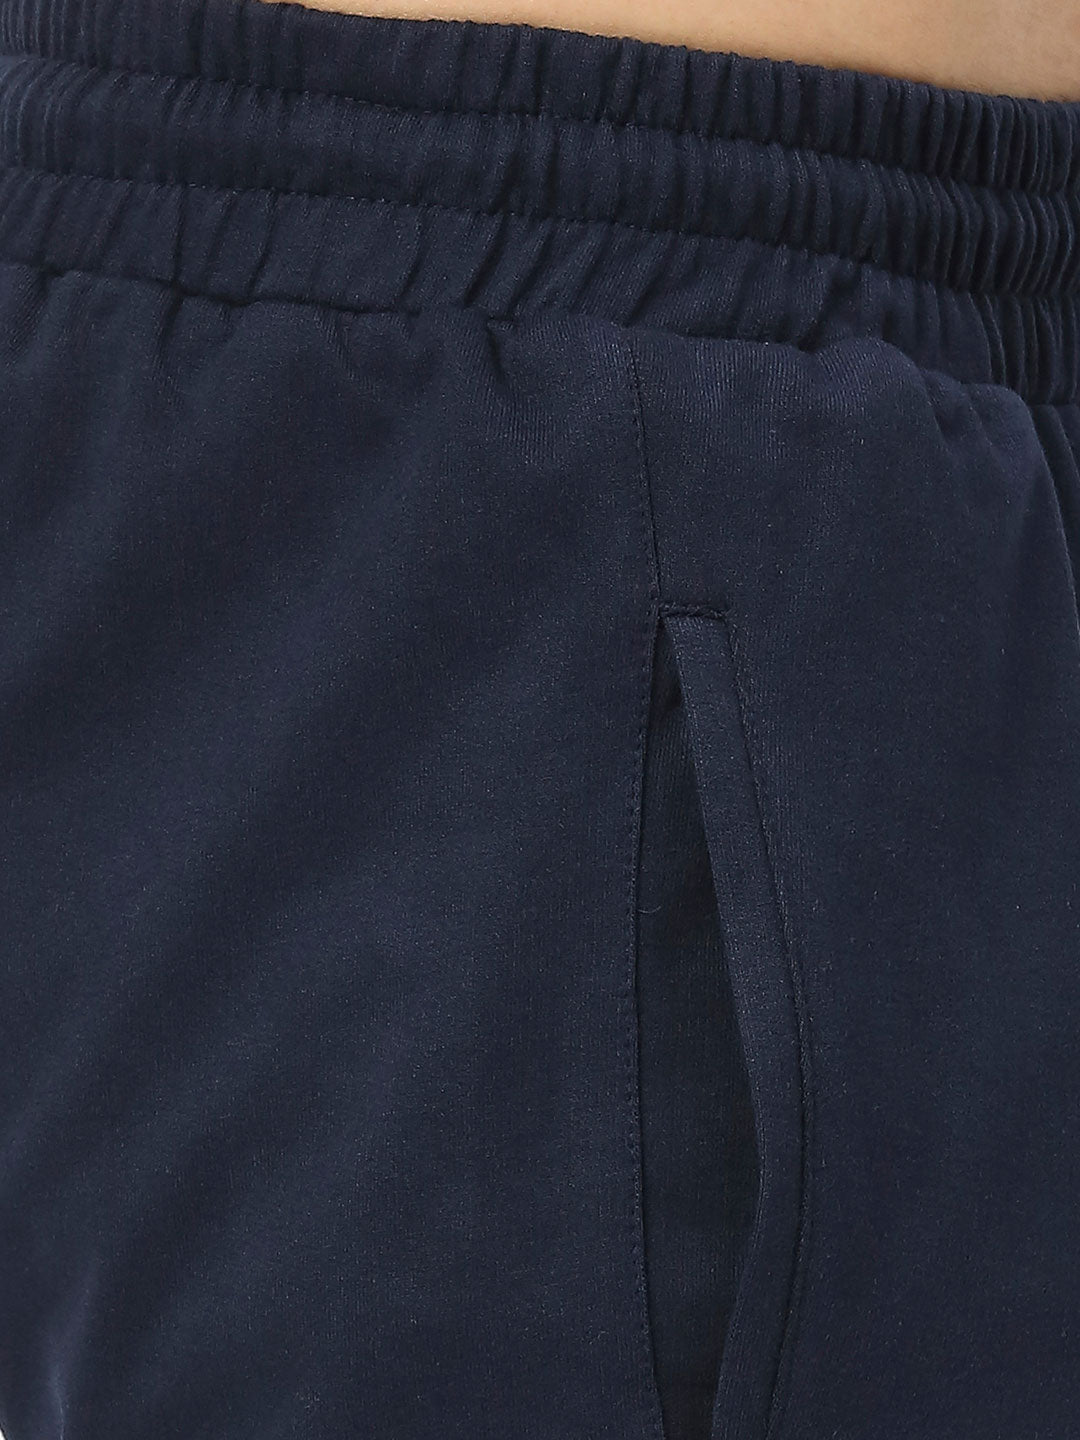 Men's Sports Trackpants - Navy Blue